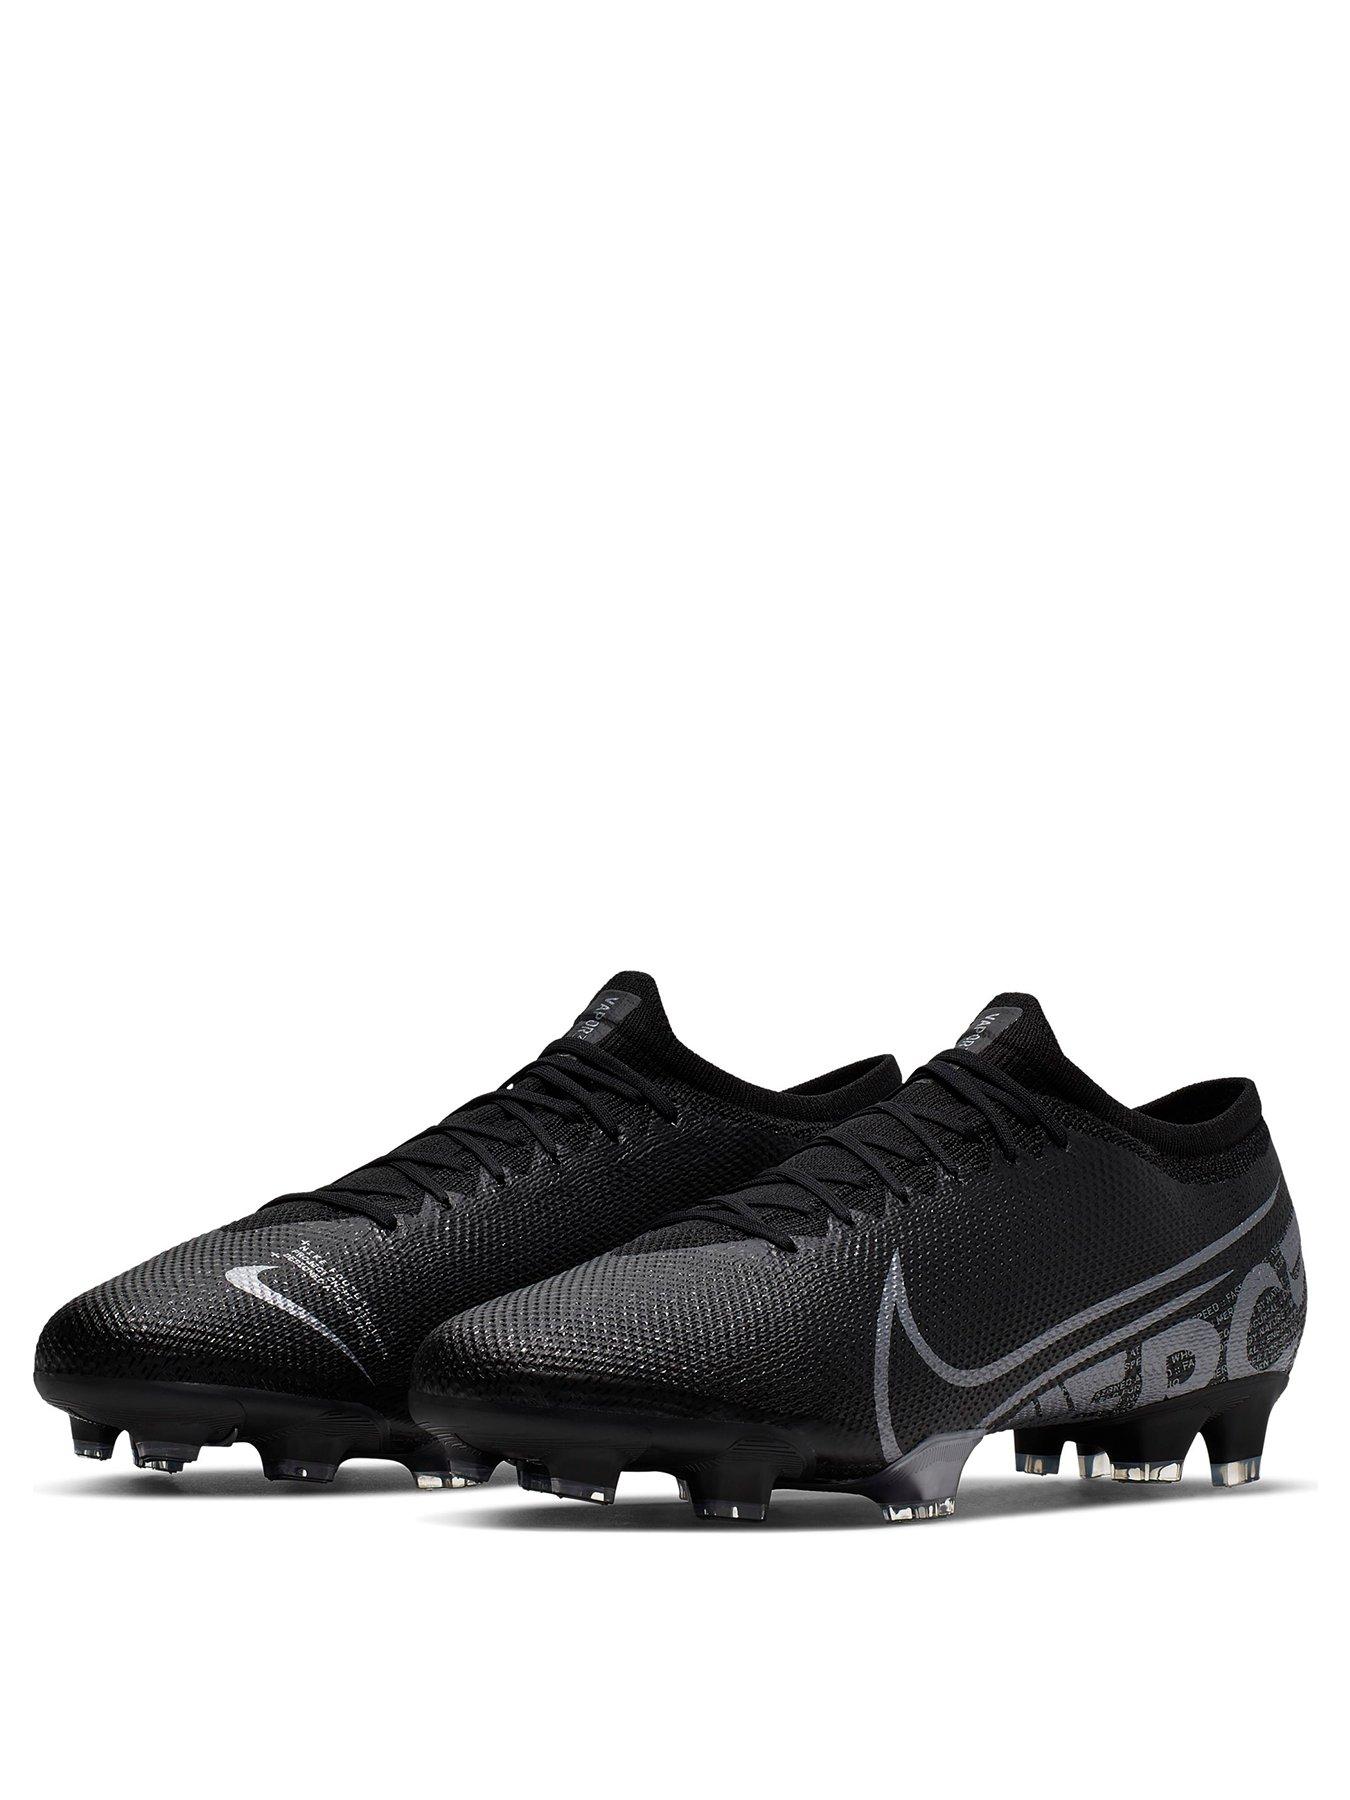 Chaussures football nike mercurial vapor xii 360 elite fg noir